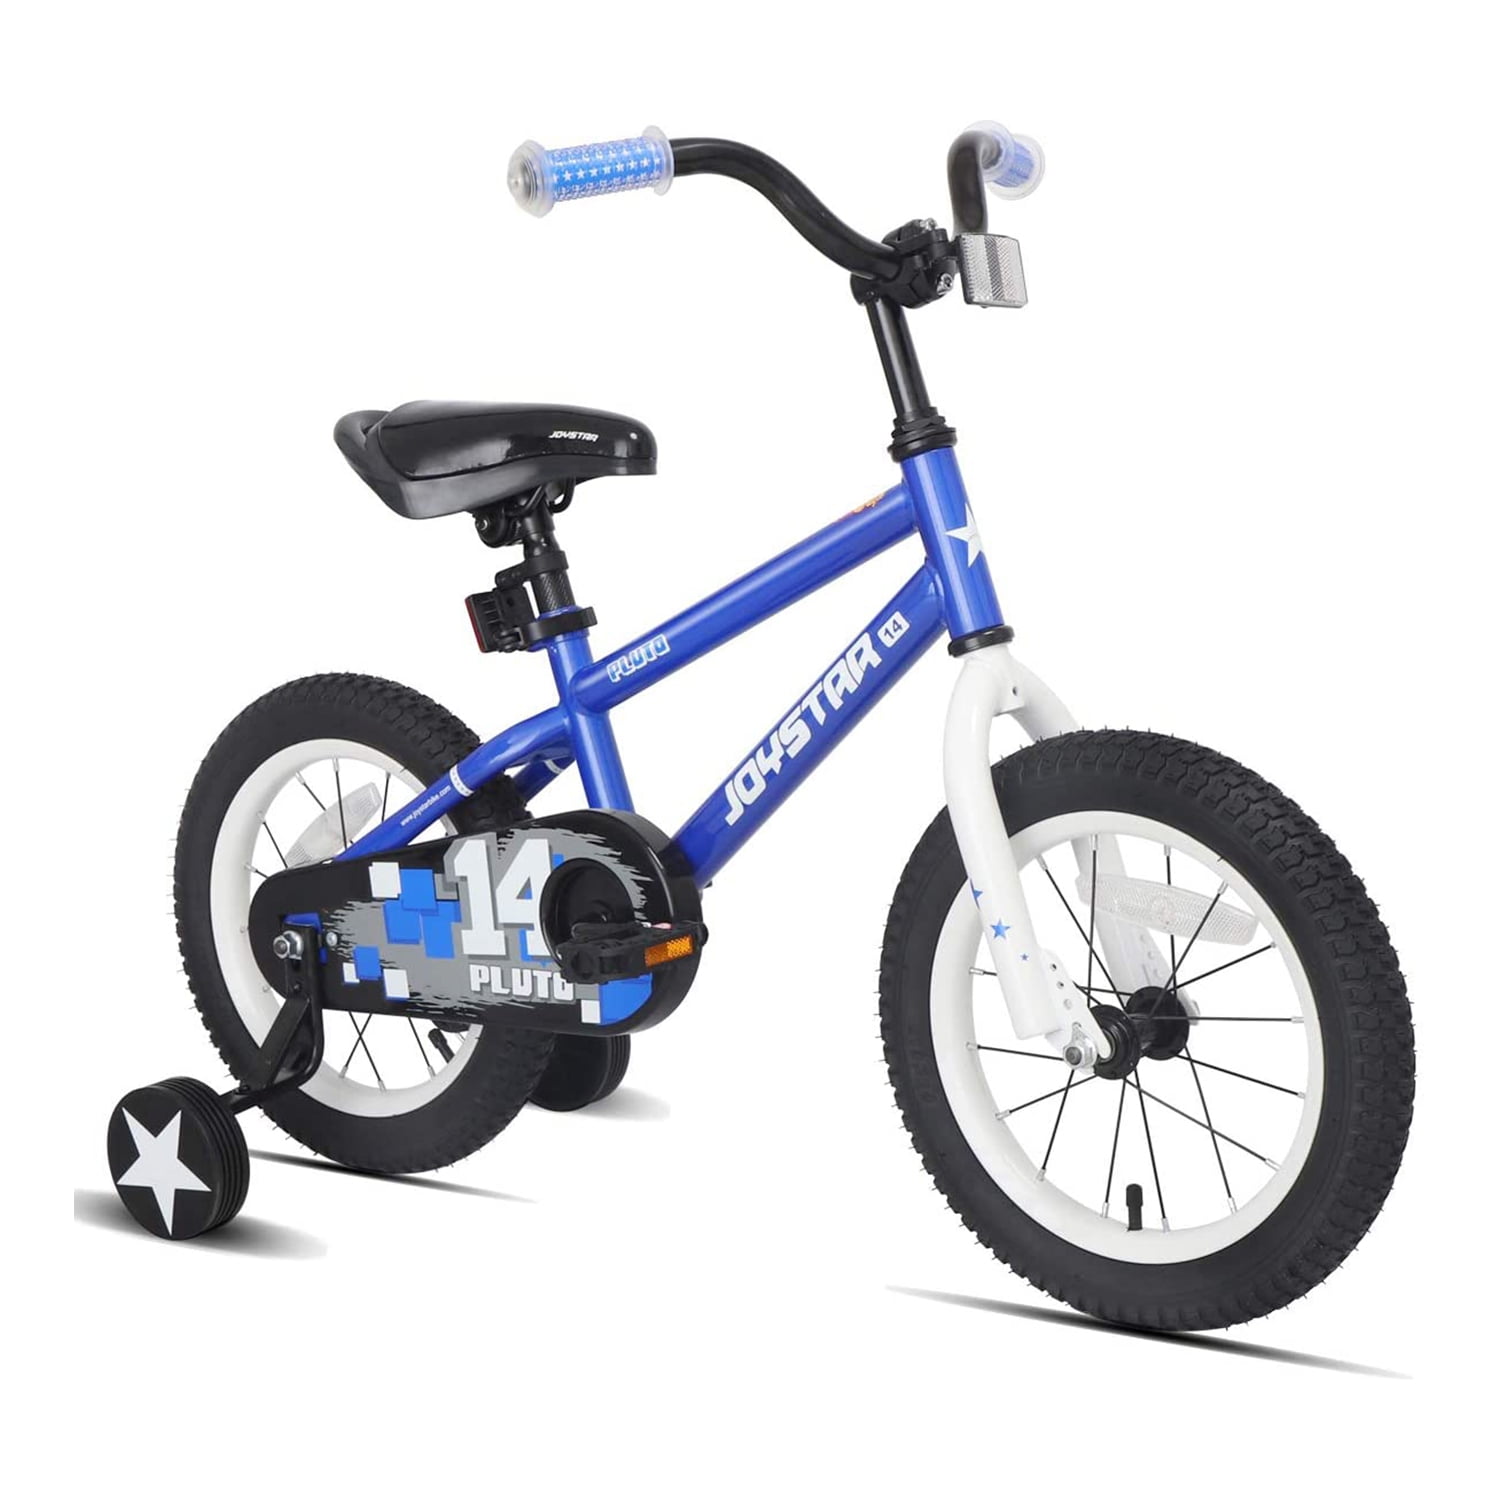 14" Boys Kids Ride-on Bike 35cm Bicycle Blue with Training Wheels R1 